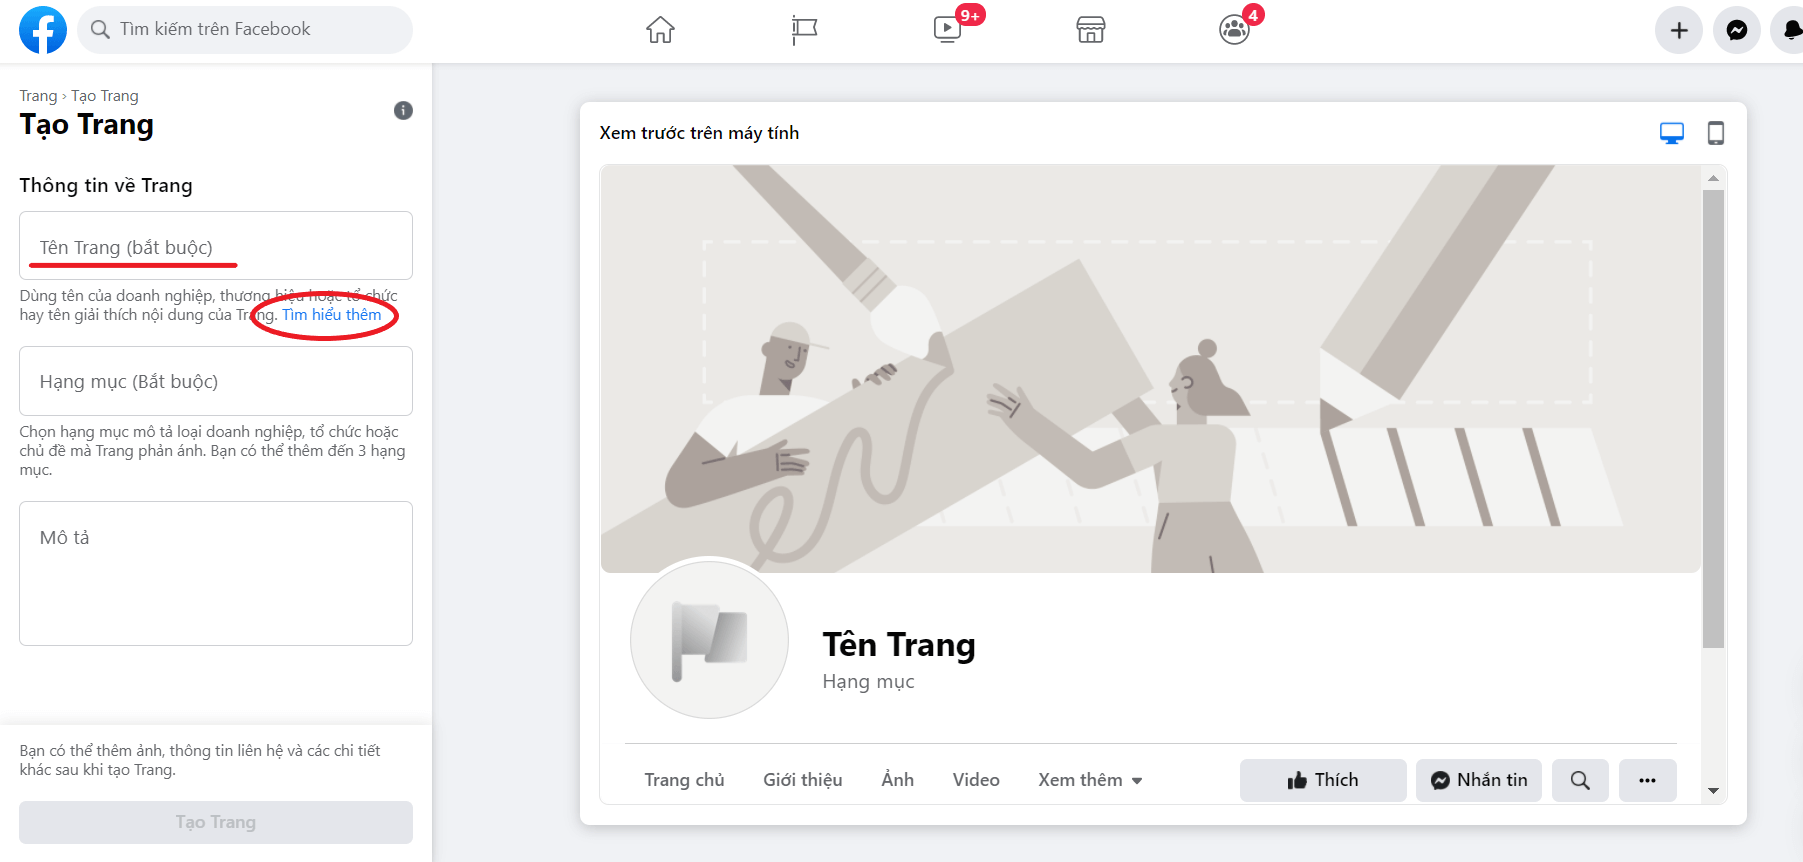 Tim hieu cach dat ten Fanpage Facebook